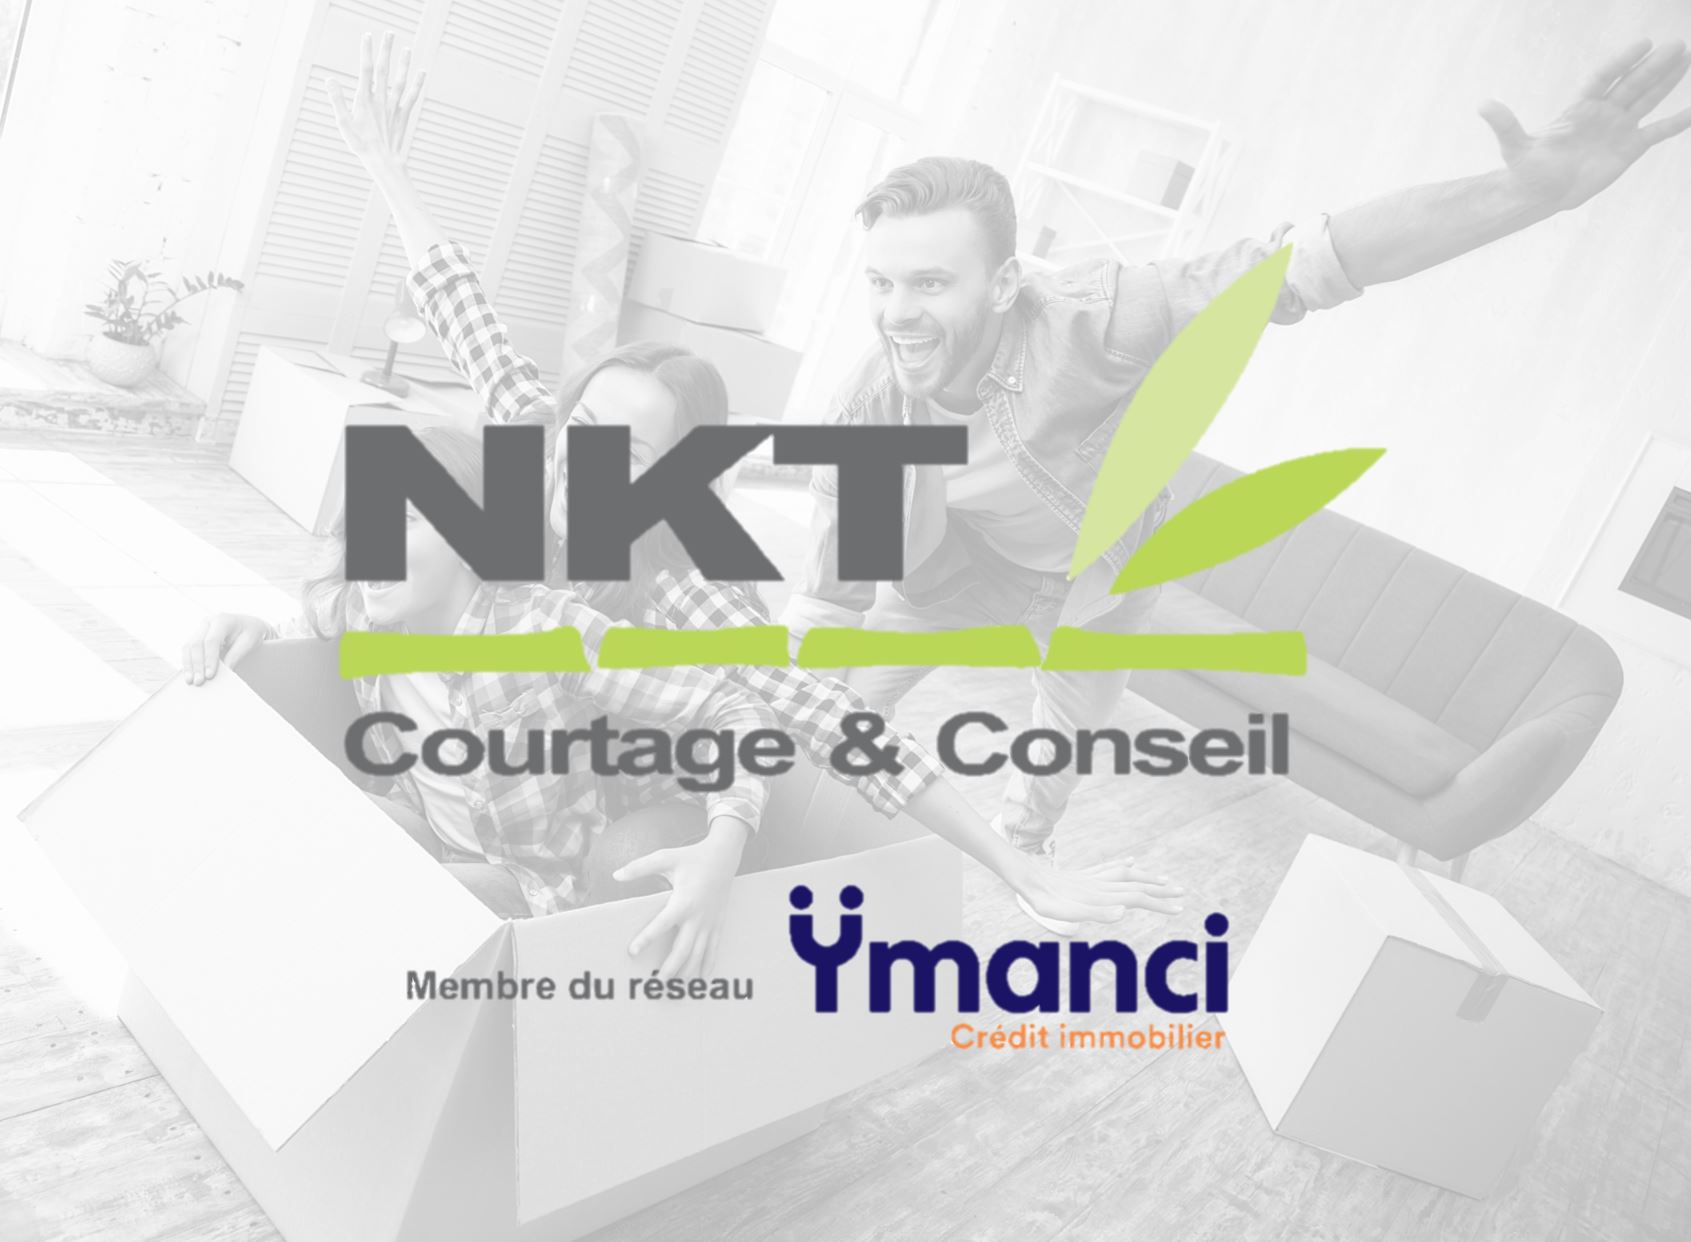 NKT Courtage & Conseil